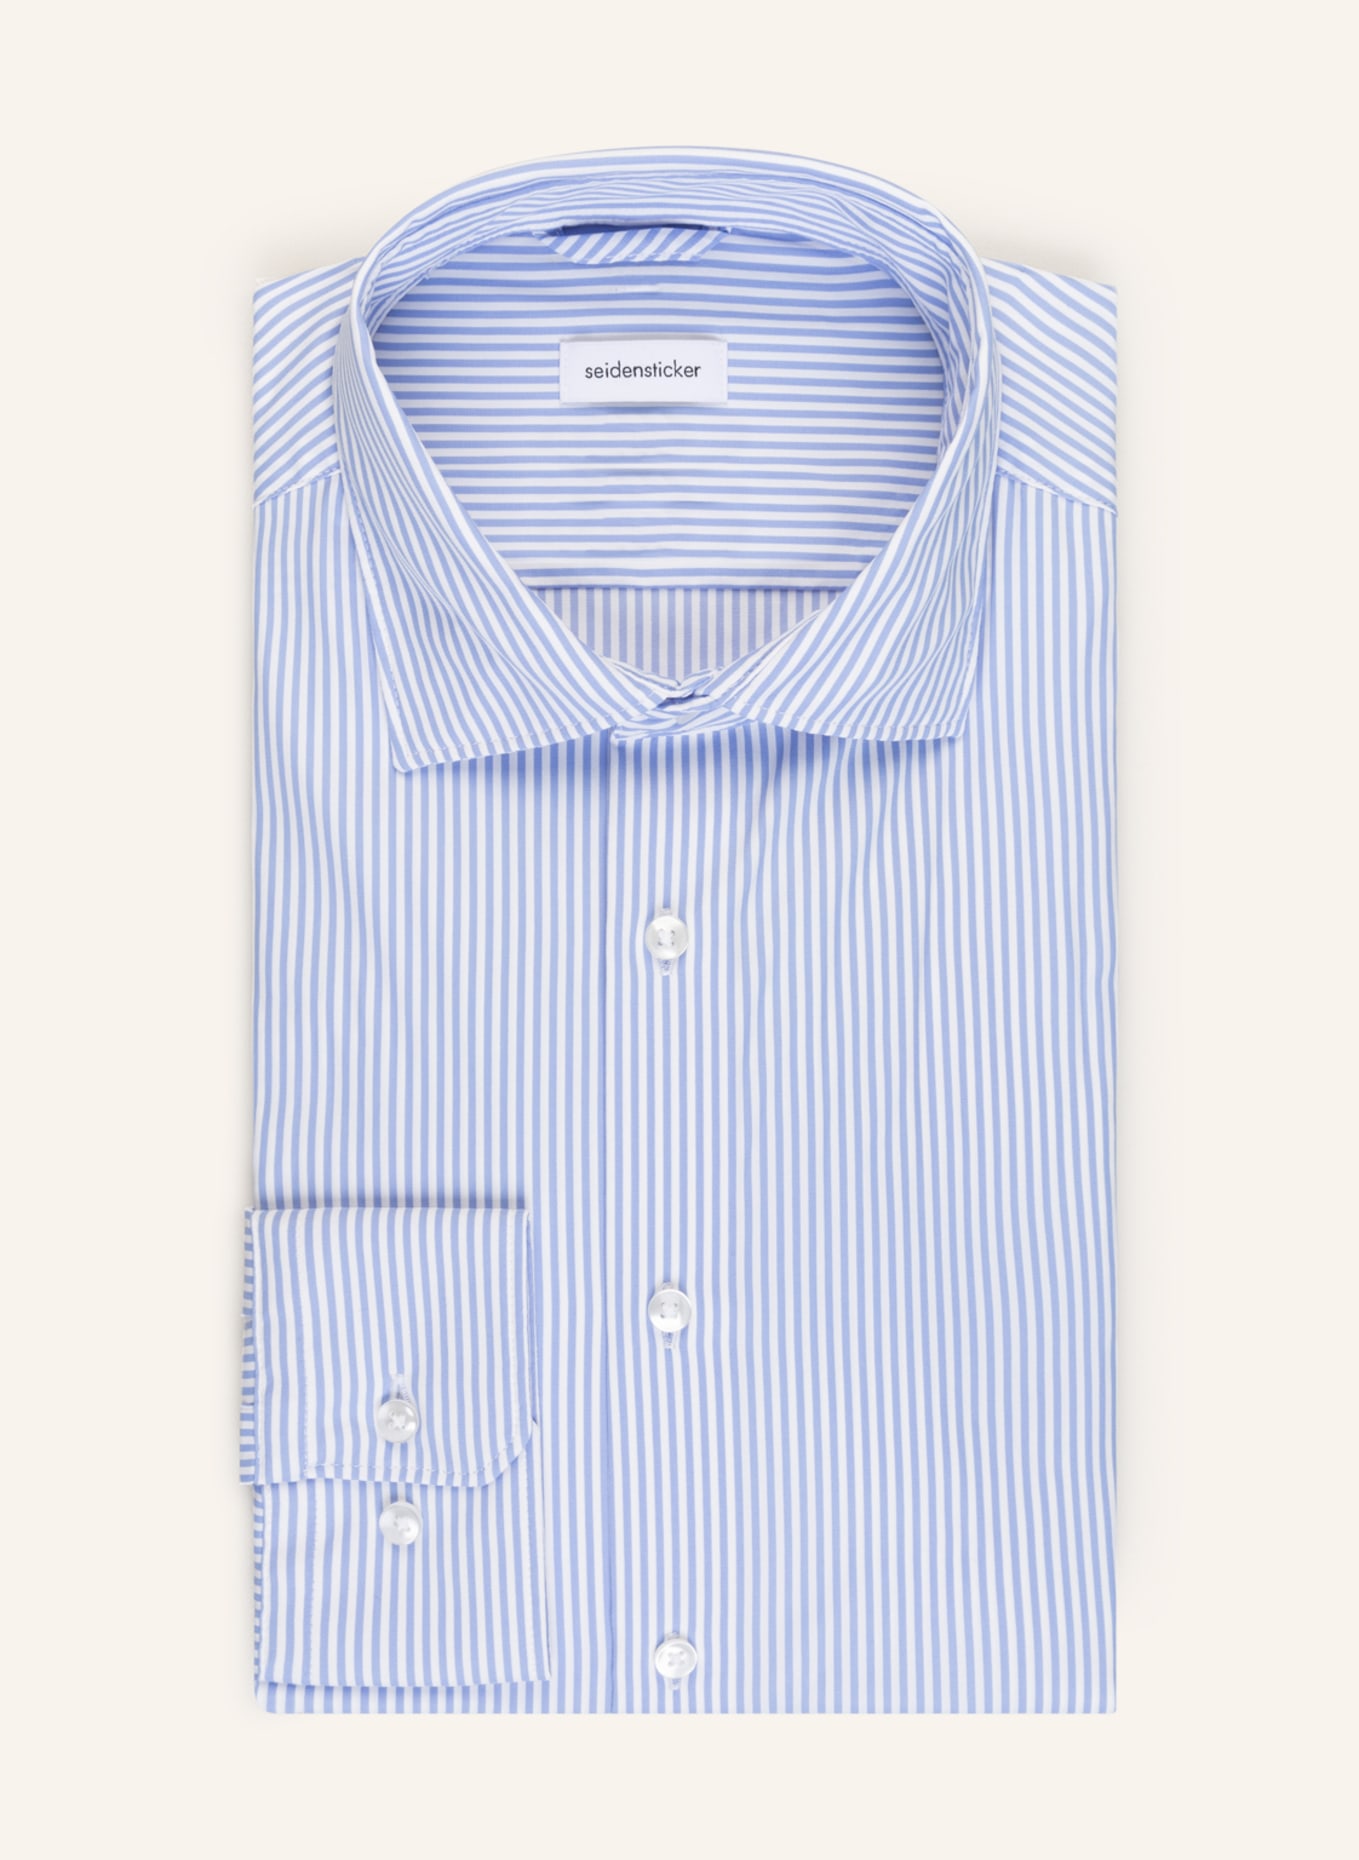 seidensticker Performance shirt slim fit, Color: LIGHT BLUE/ WHITE (Image 1)